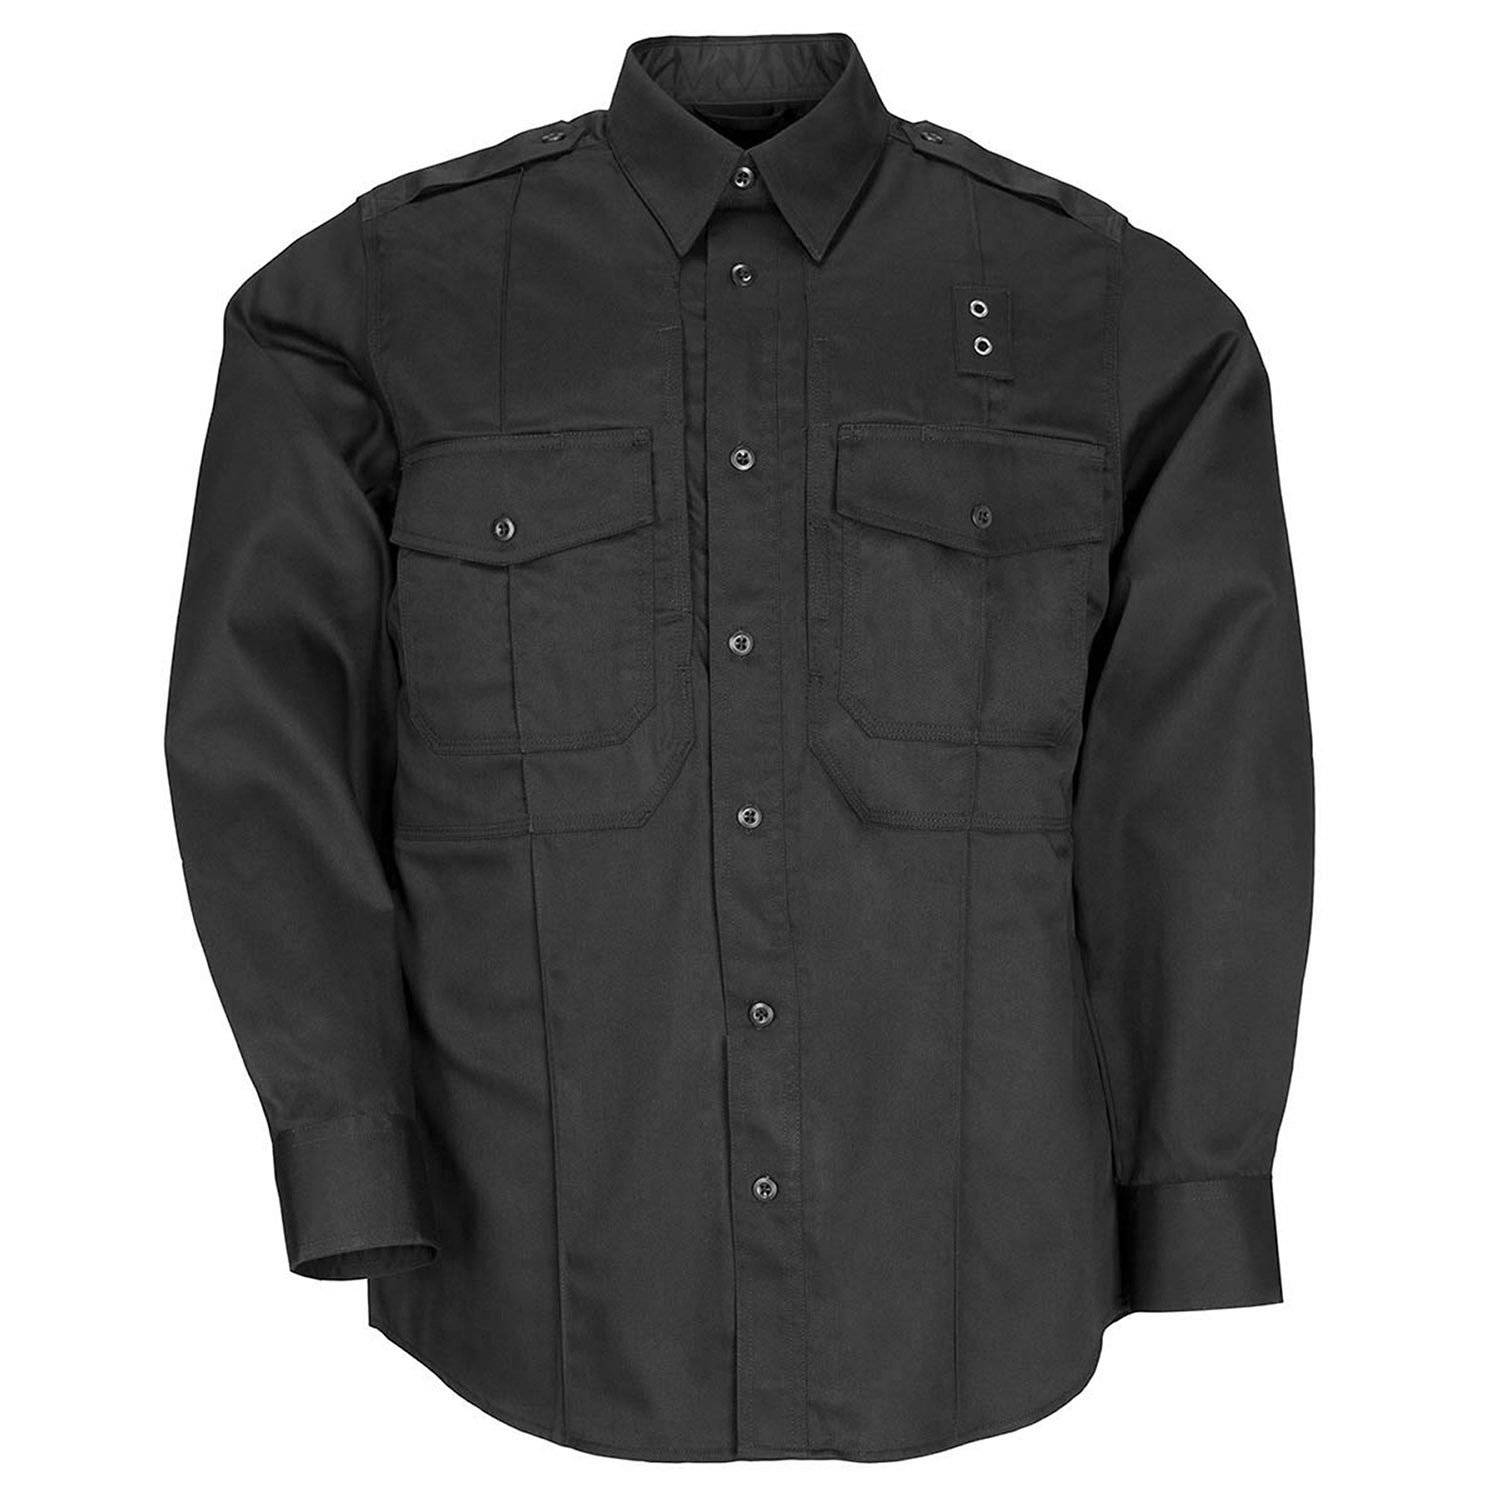 Black Military Design Short Sleeved Professional Tactical Dress Shirt